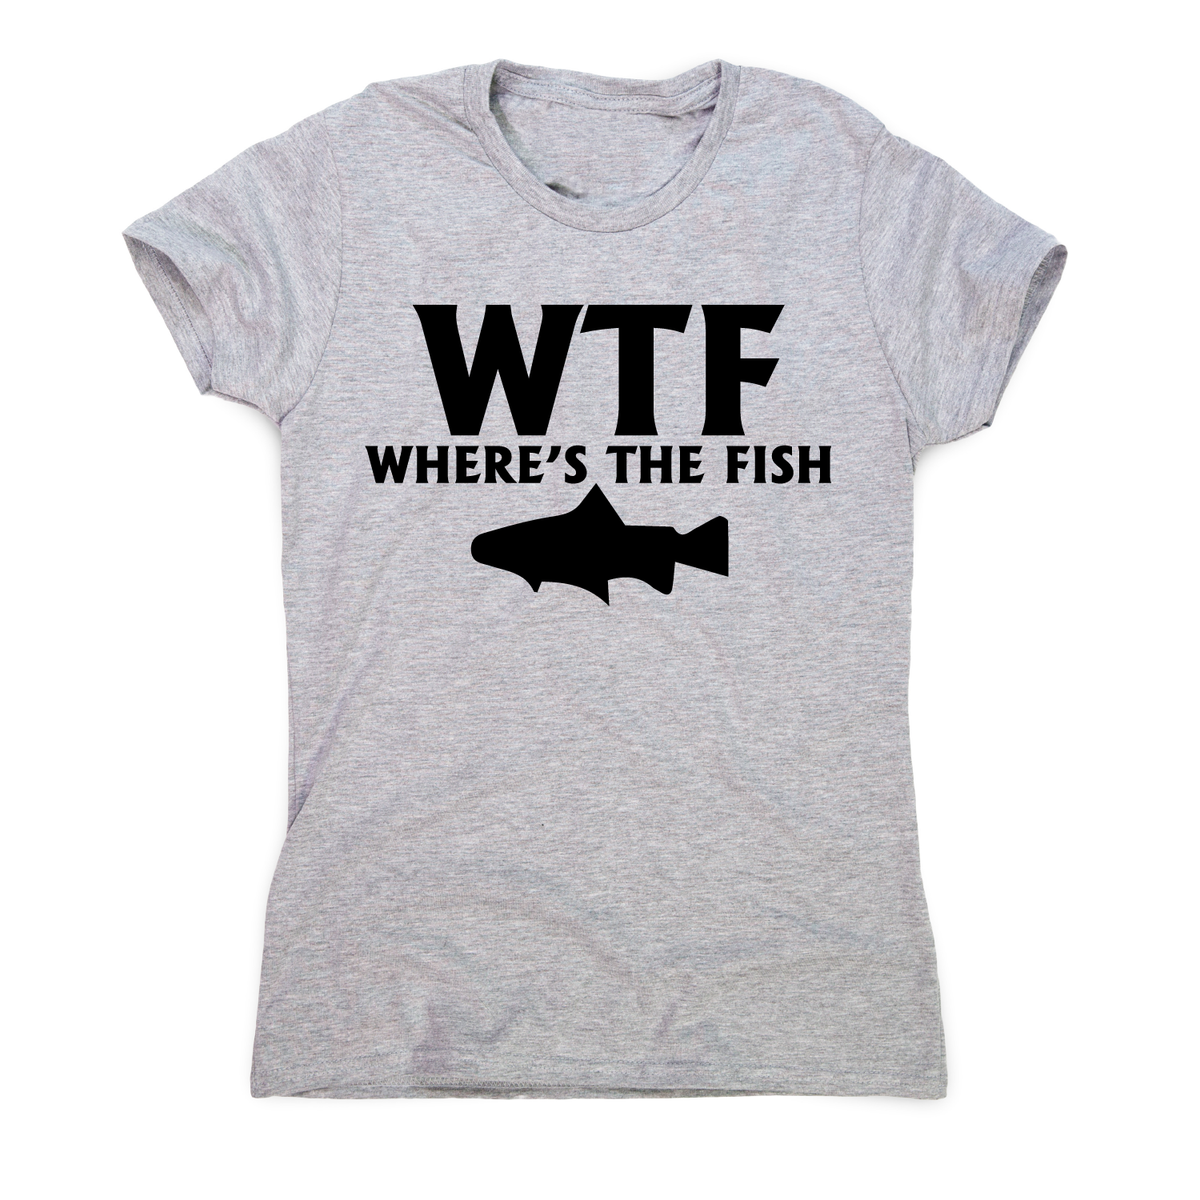 WTF Where's The Fish Funny Fishing T-Shirt Women's Grey / XL